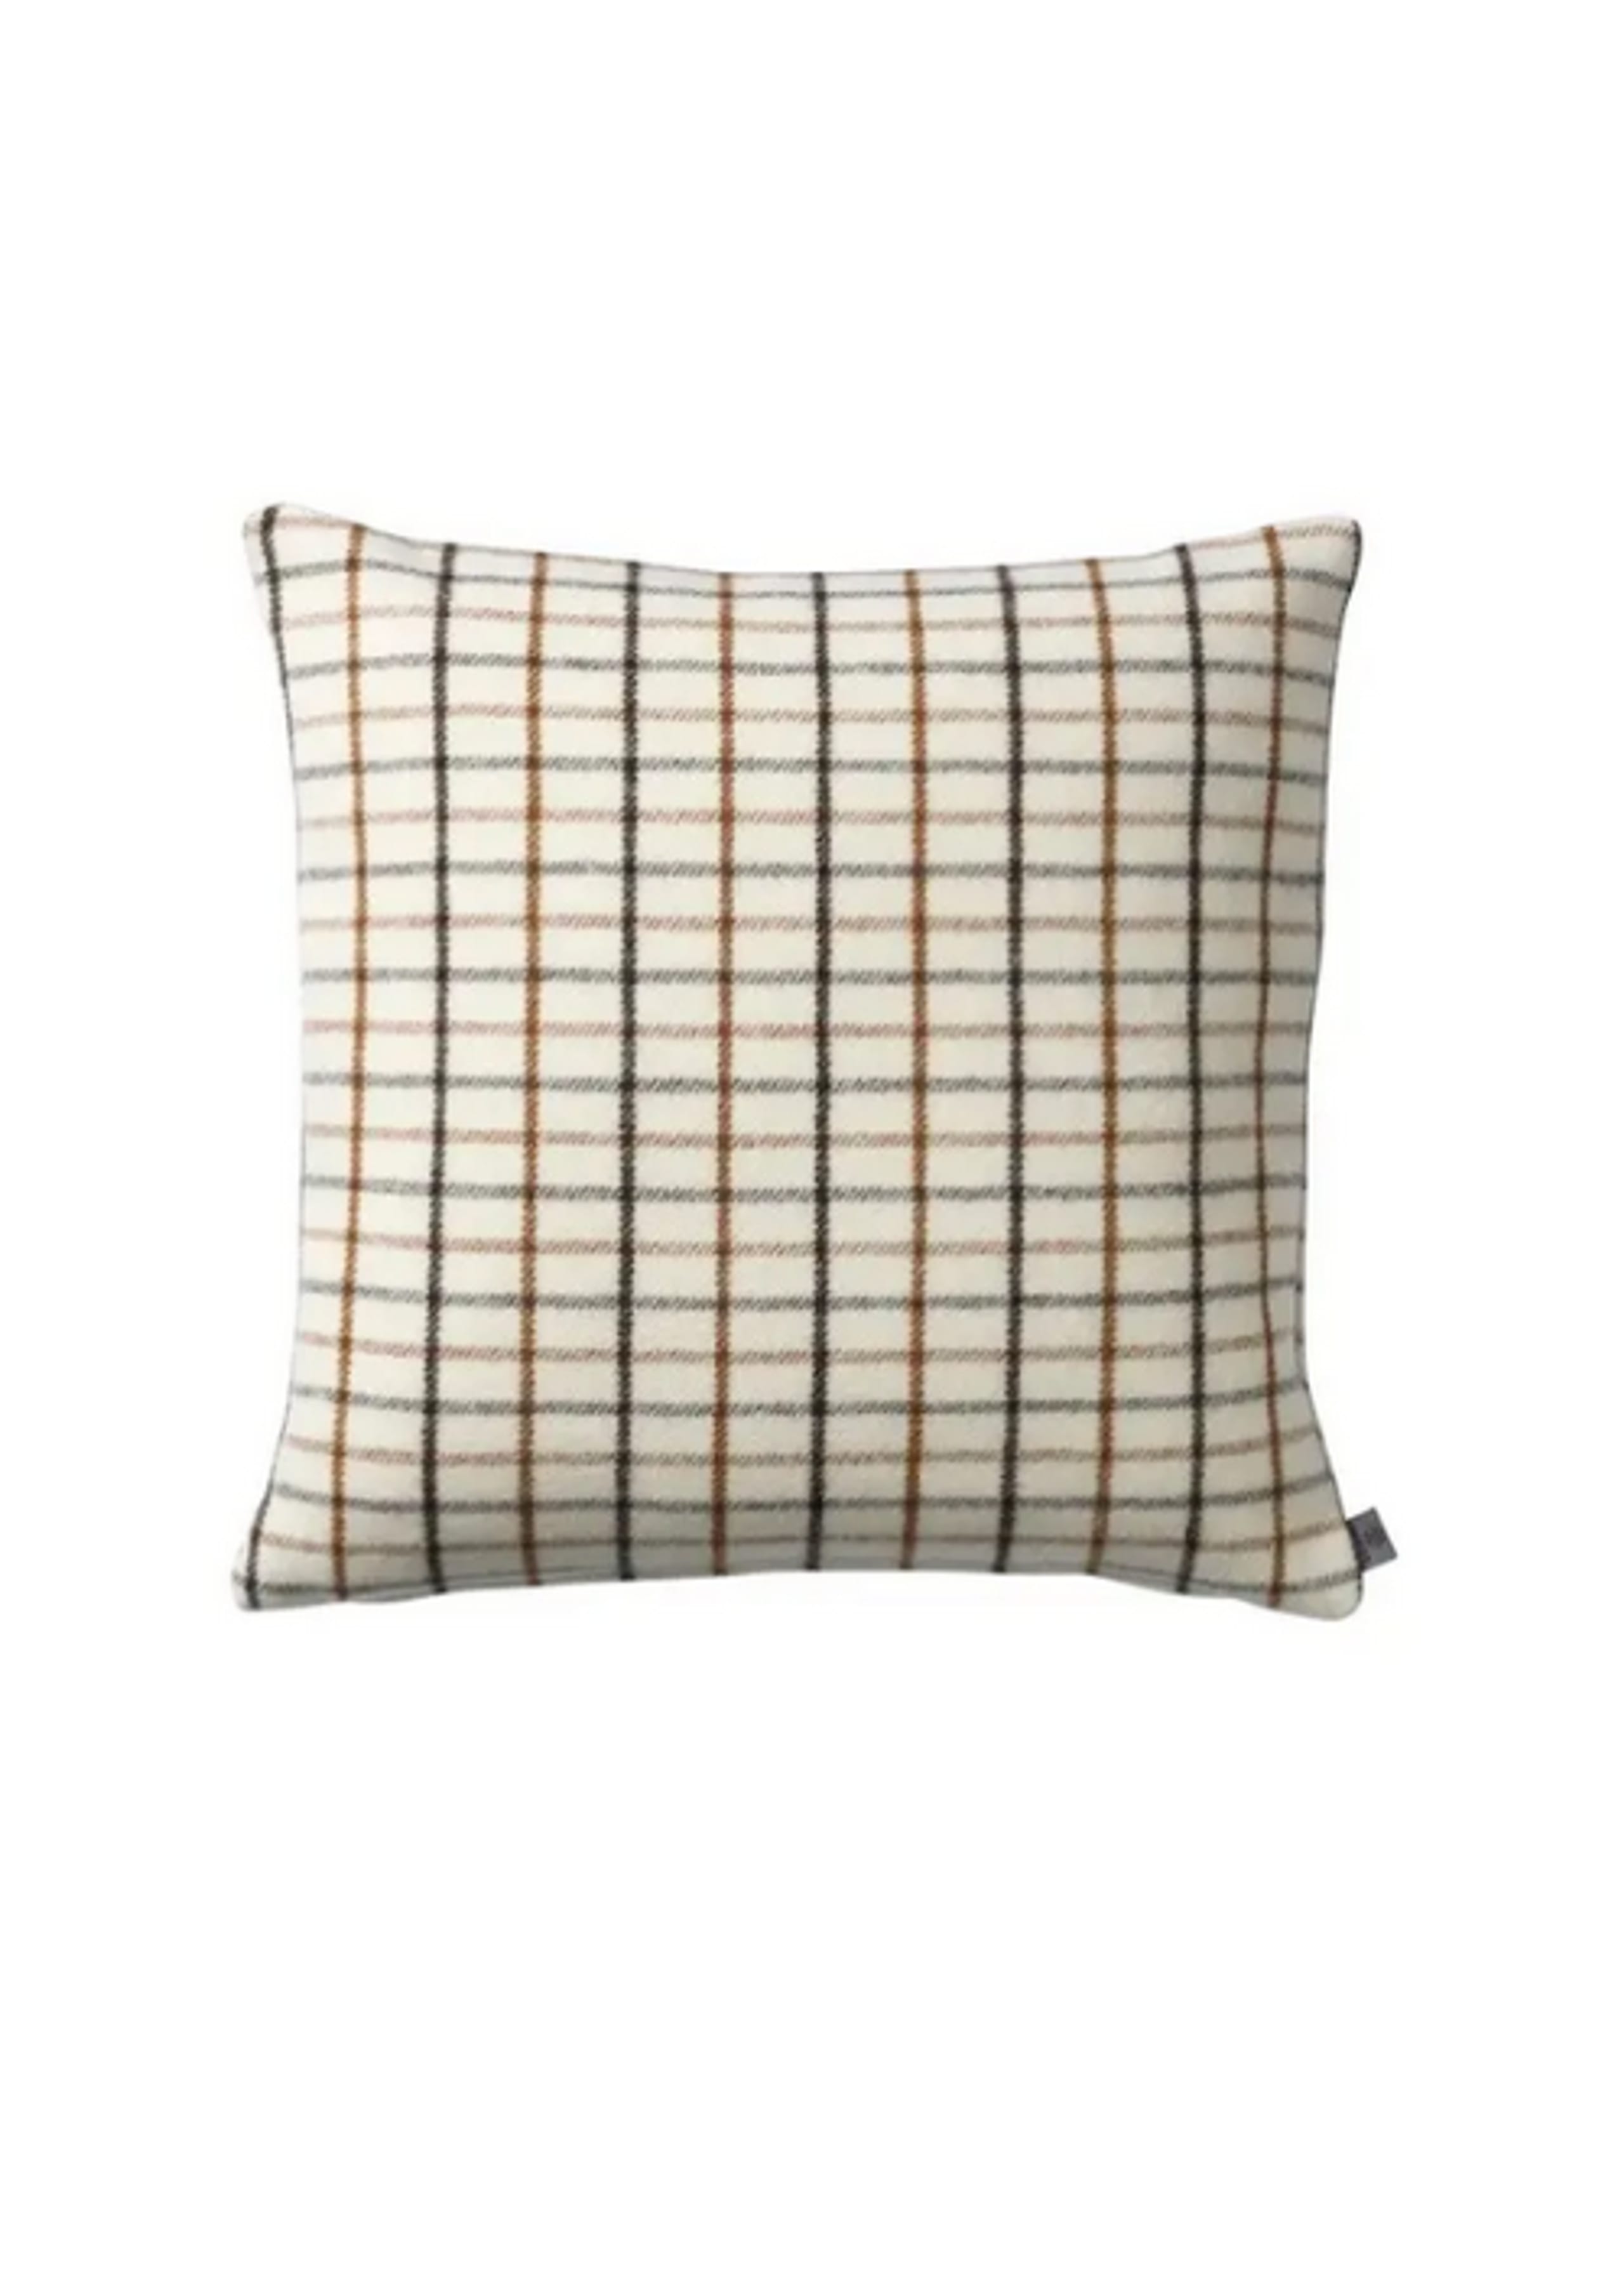 FDB Møbler / Furniture - Pillow - Pude - R16 Slotsholmen  - Brown / Black / White - Small